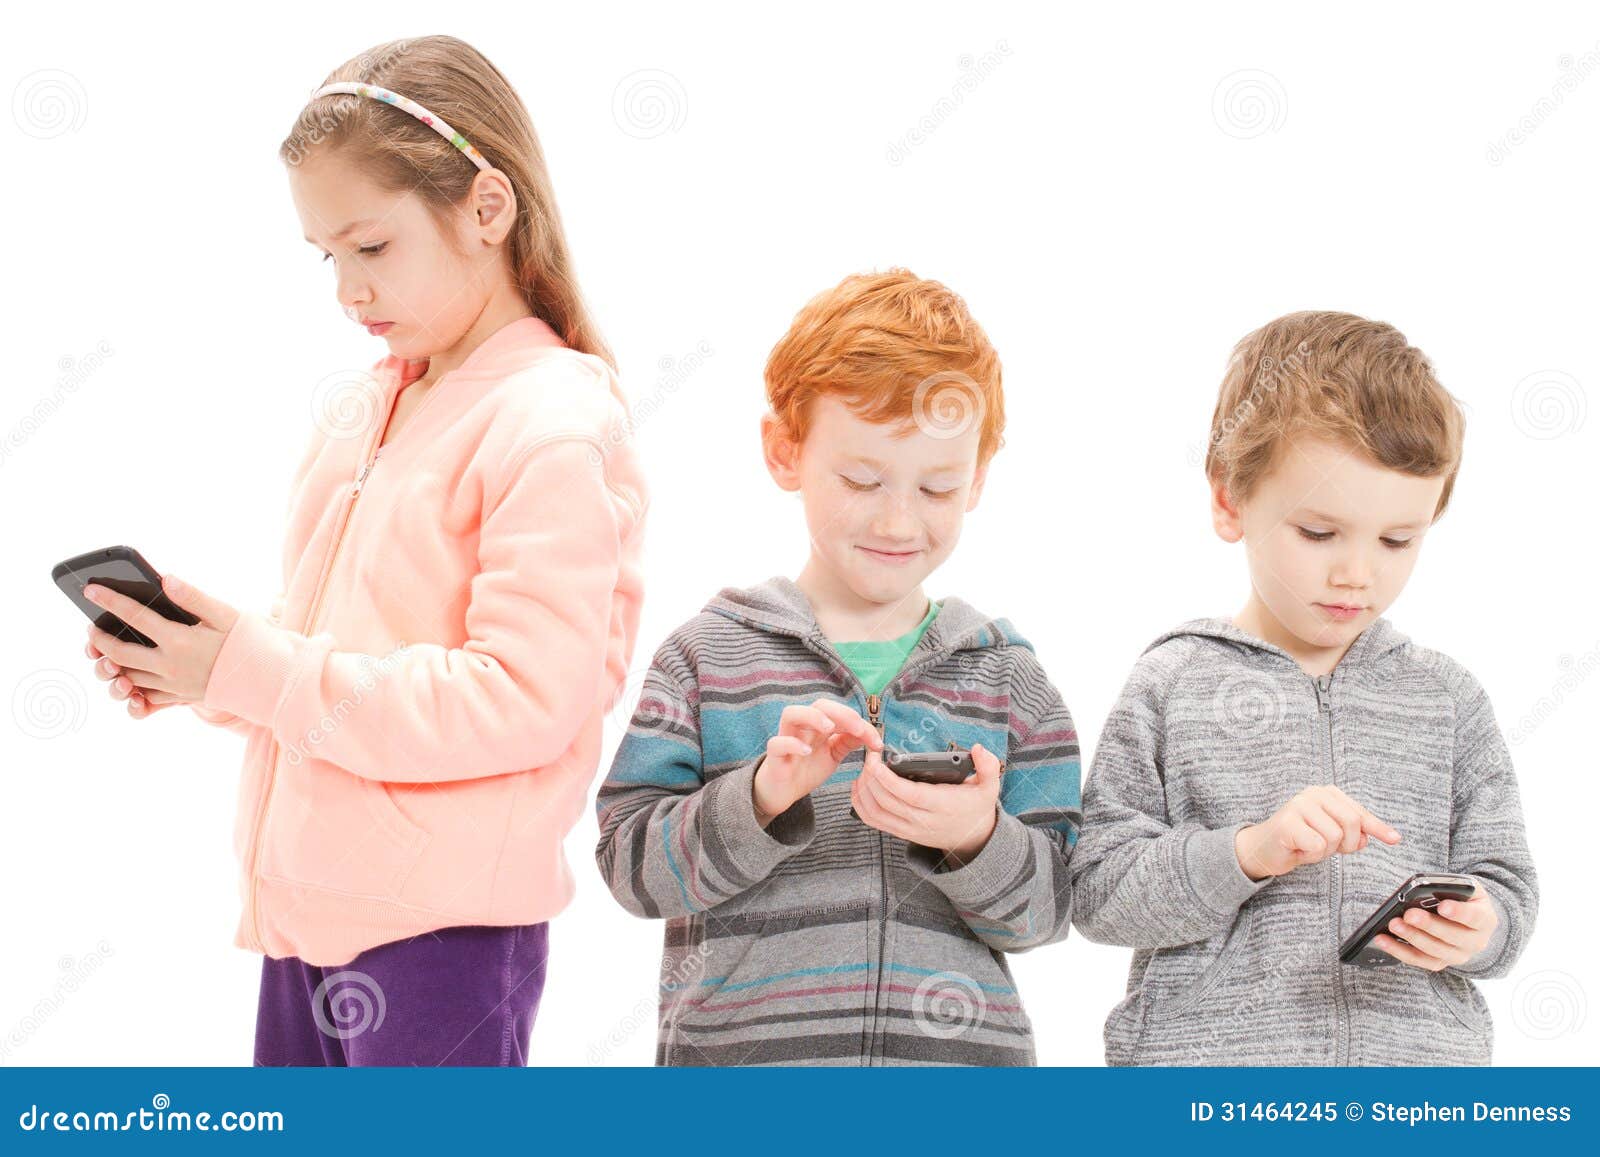 young children using social media